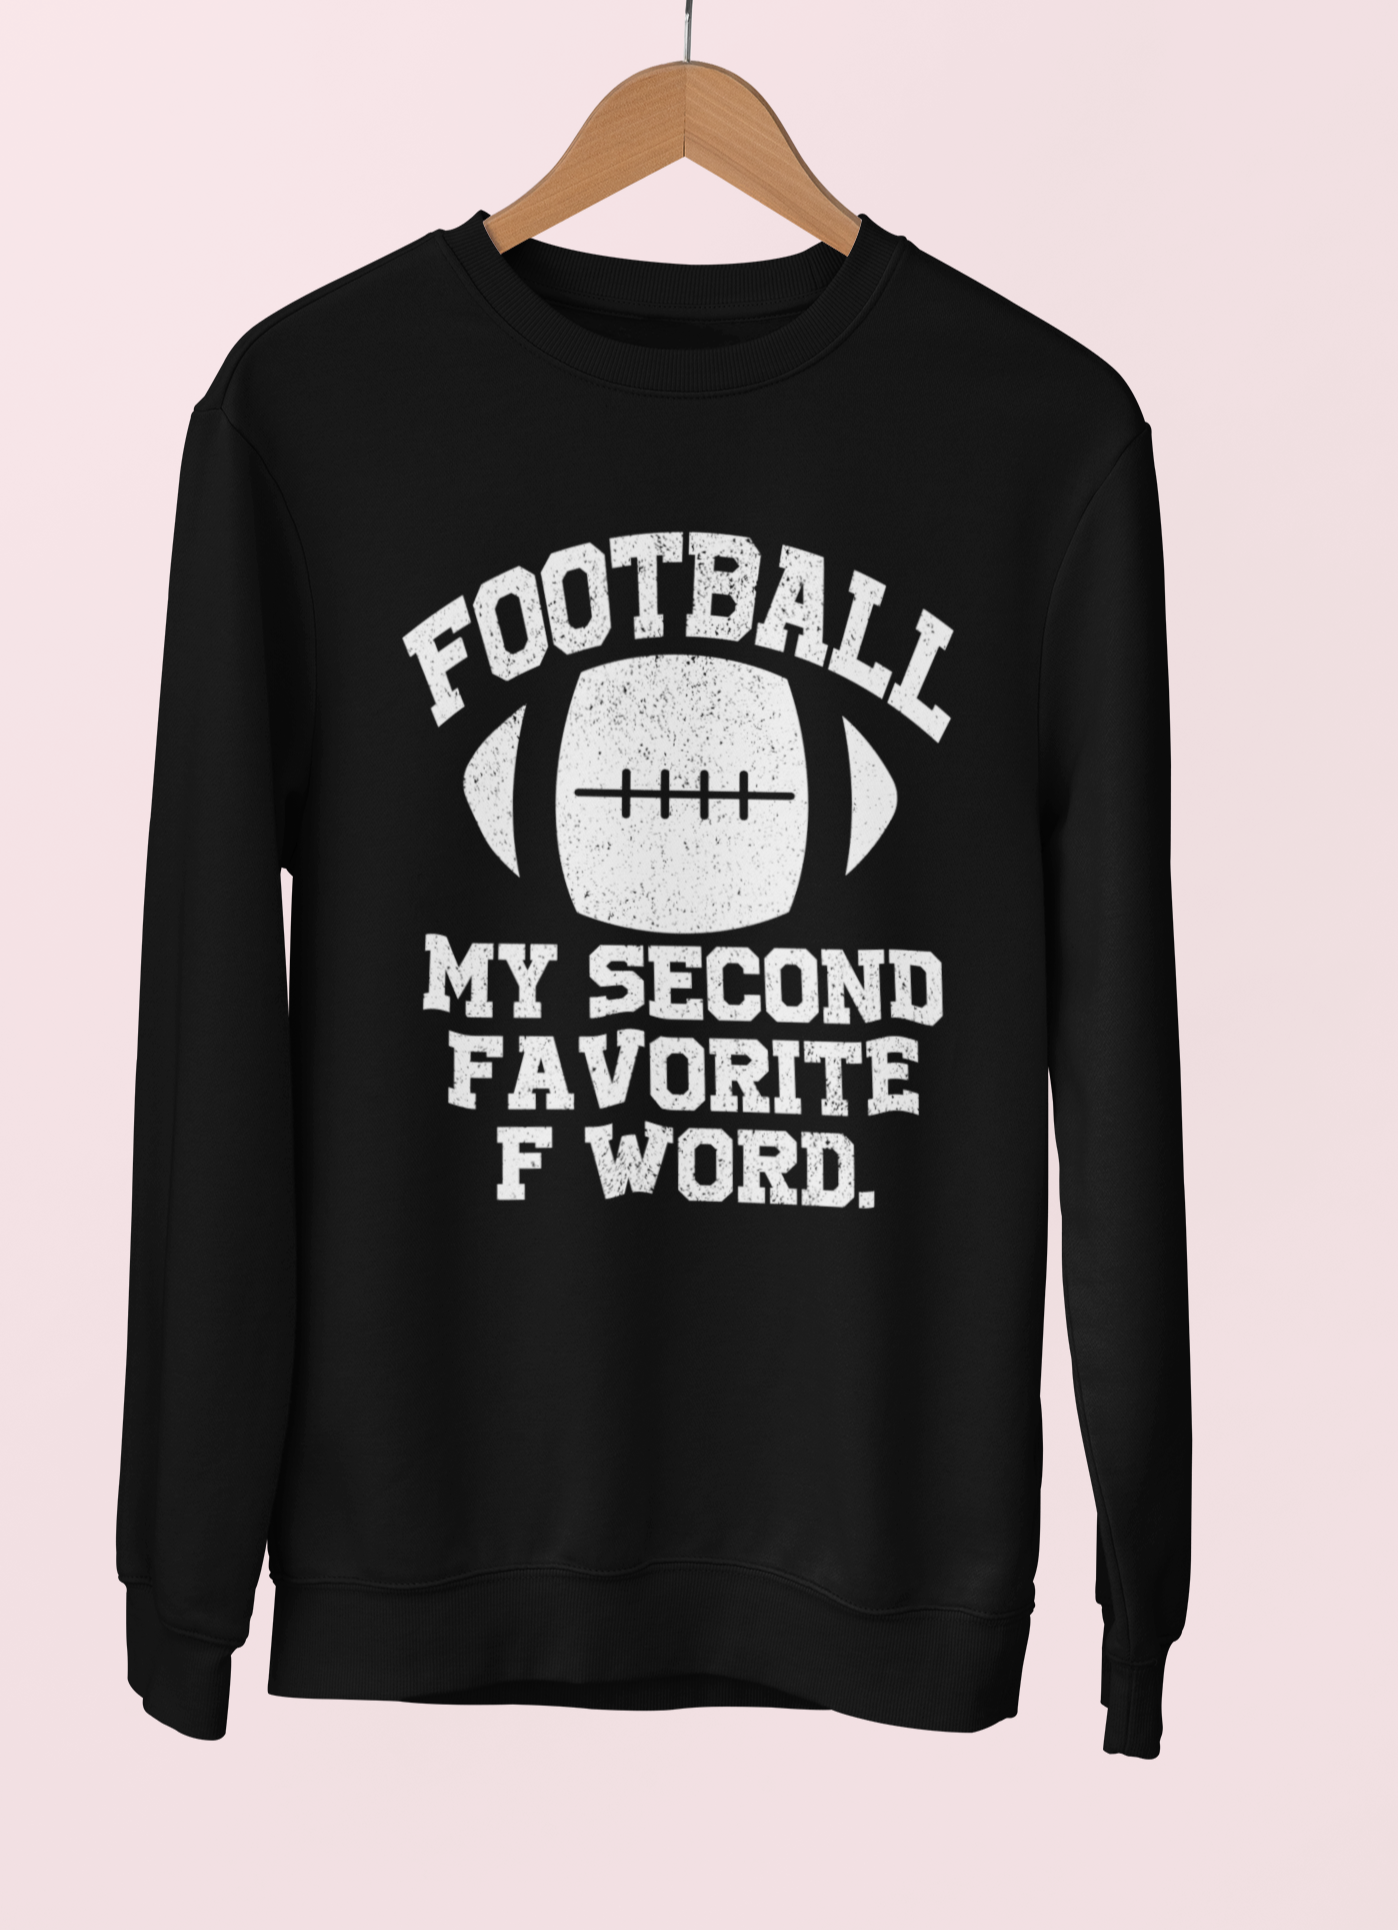 Black sweatshirt saying football is my second favorite f word - HighCiti